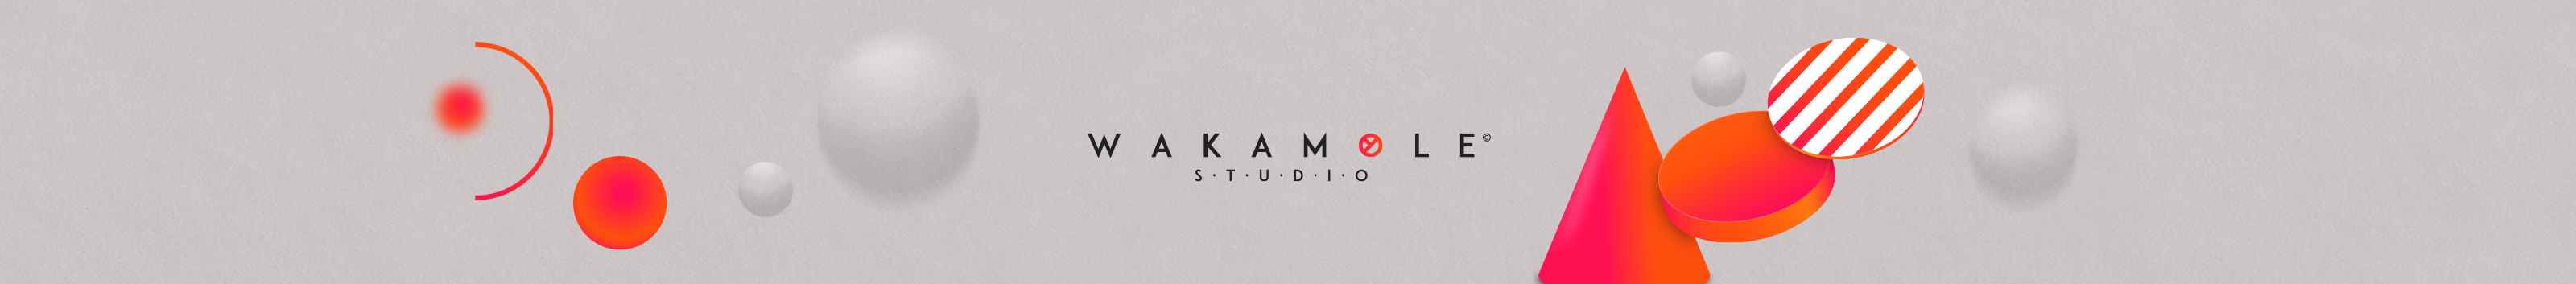 Баннер профиля Wakamole Studio